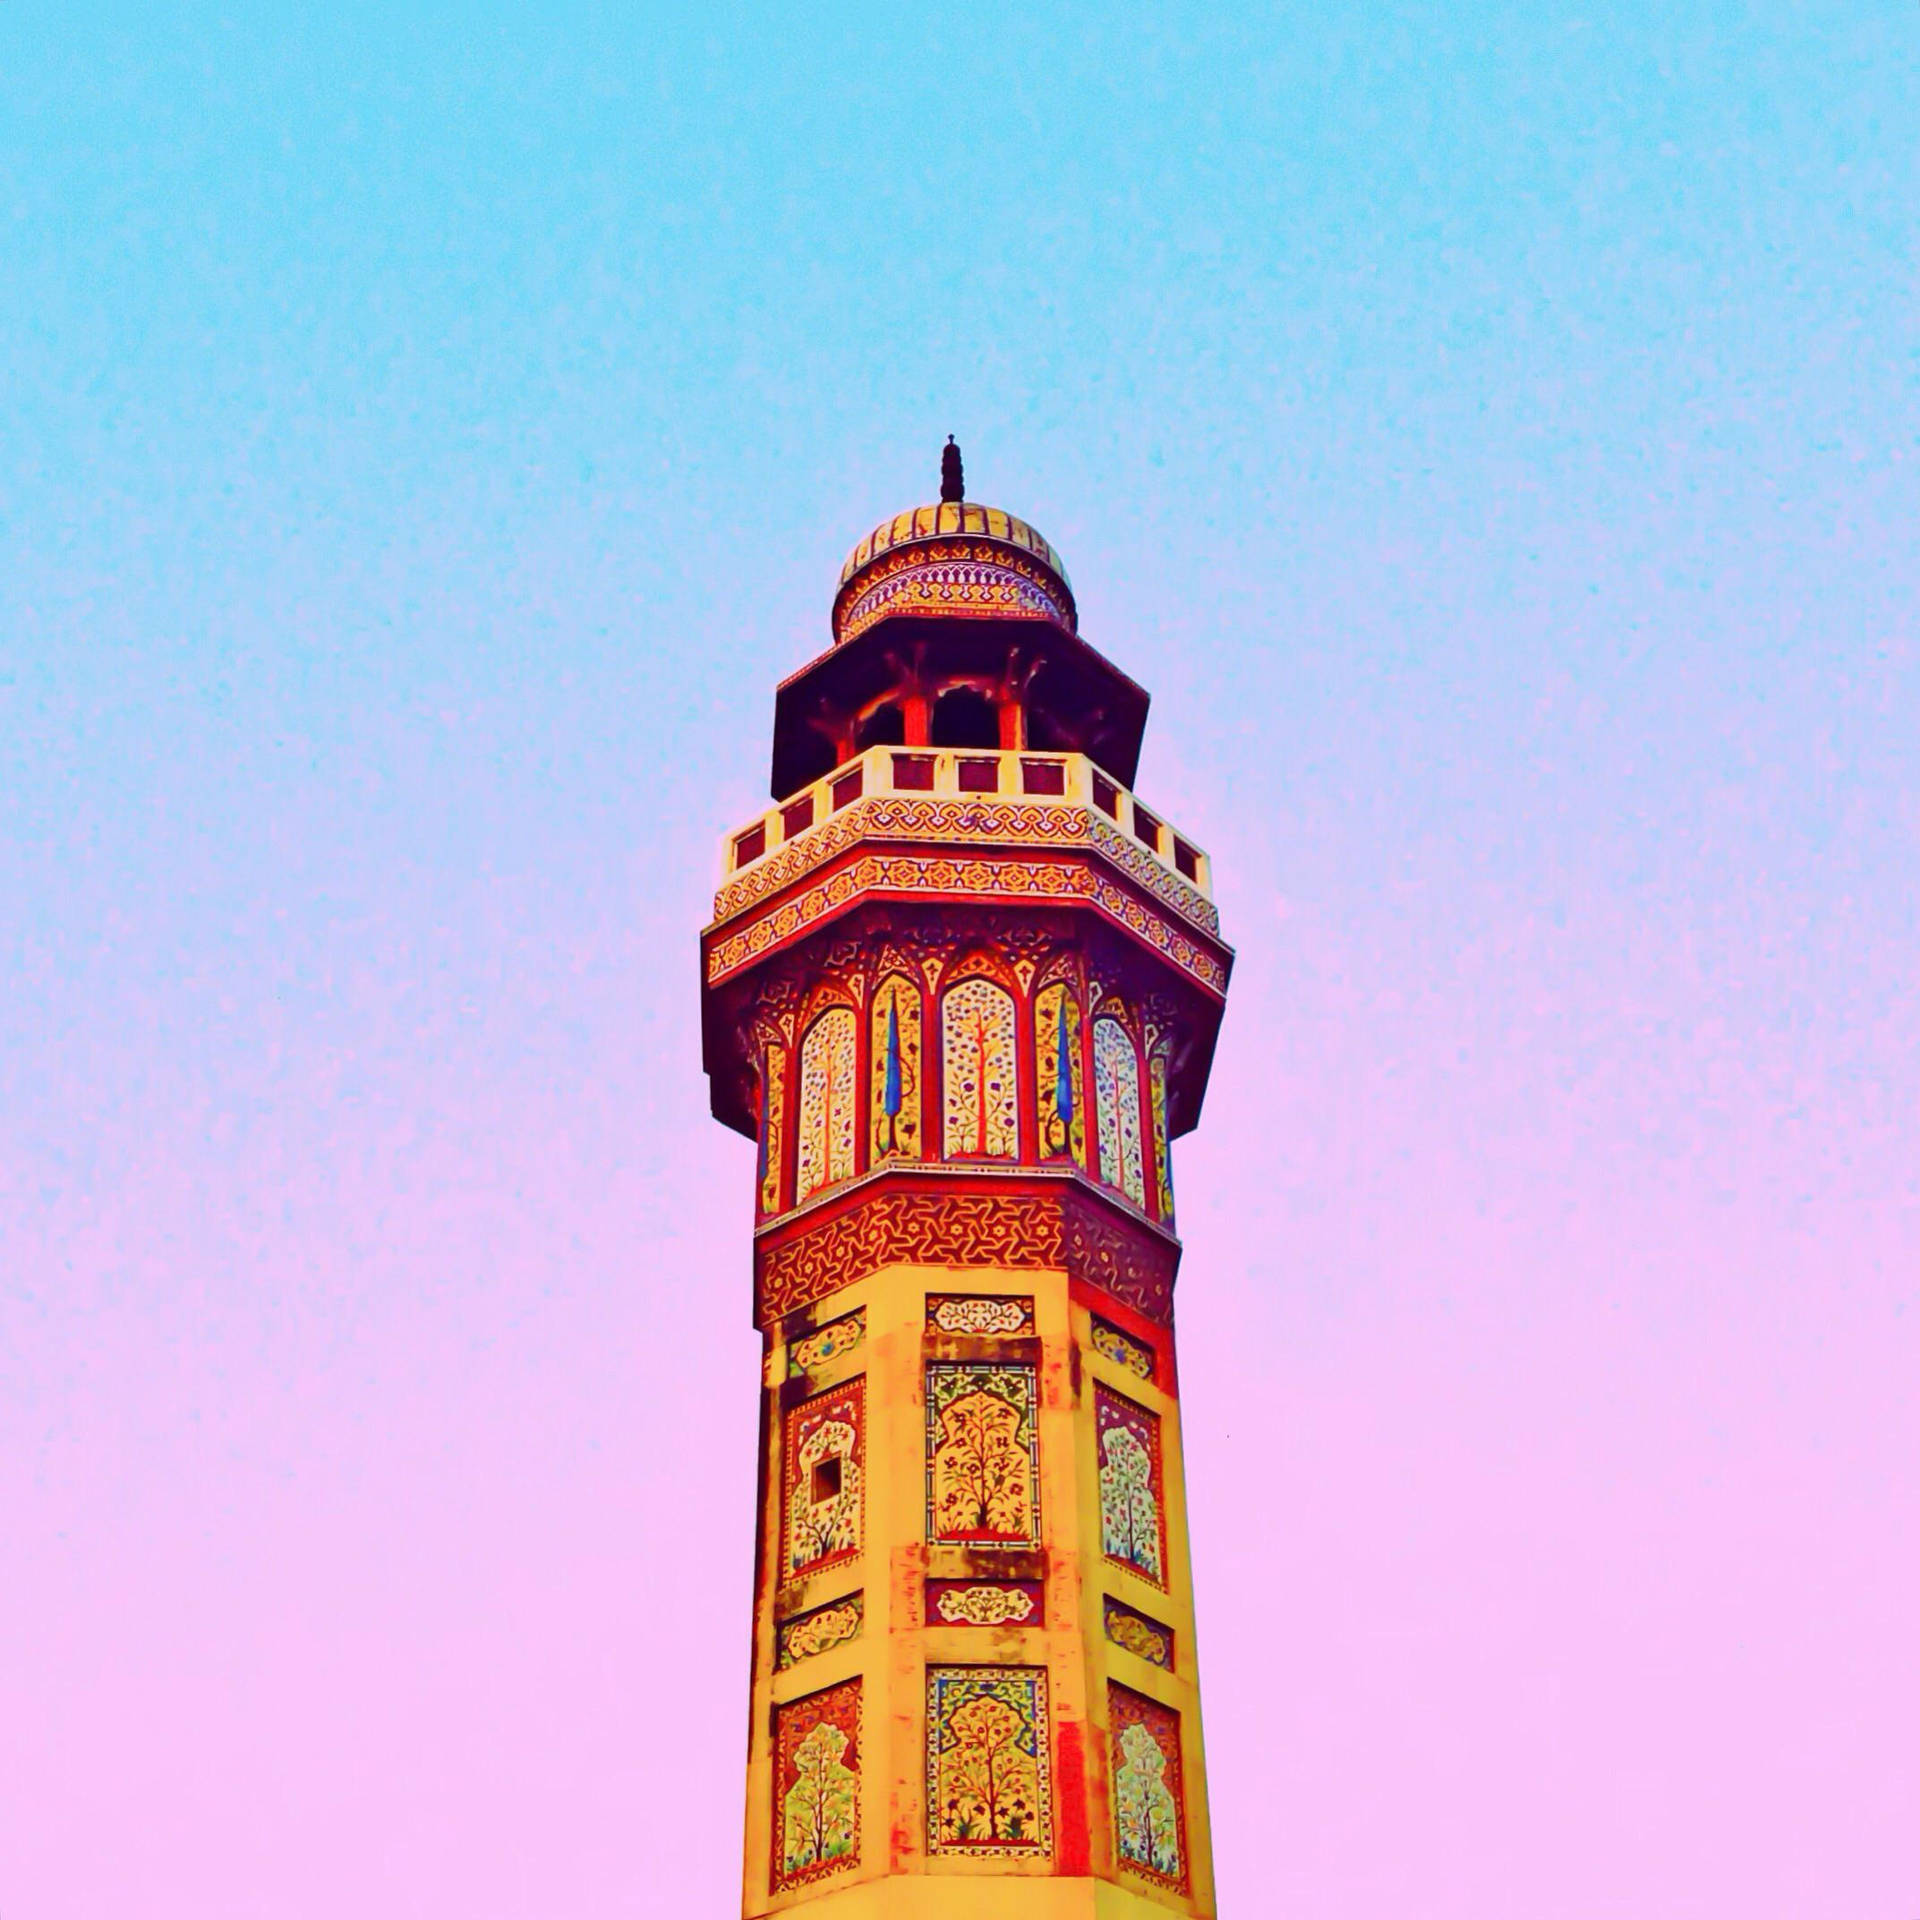 Lahoremasjid Wazir Khan Minaret Would Be Translated To 